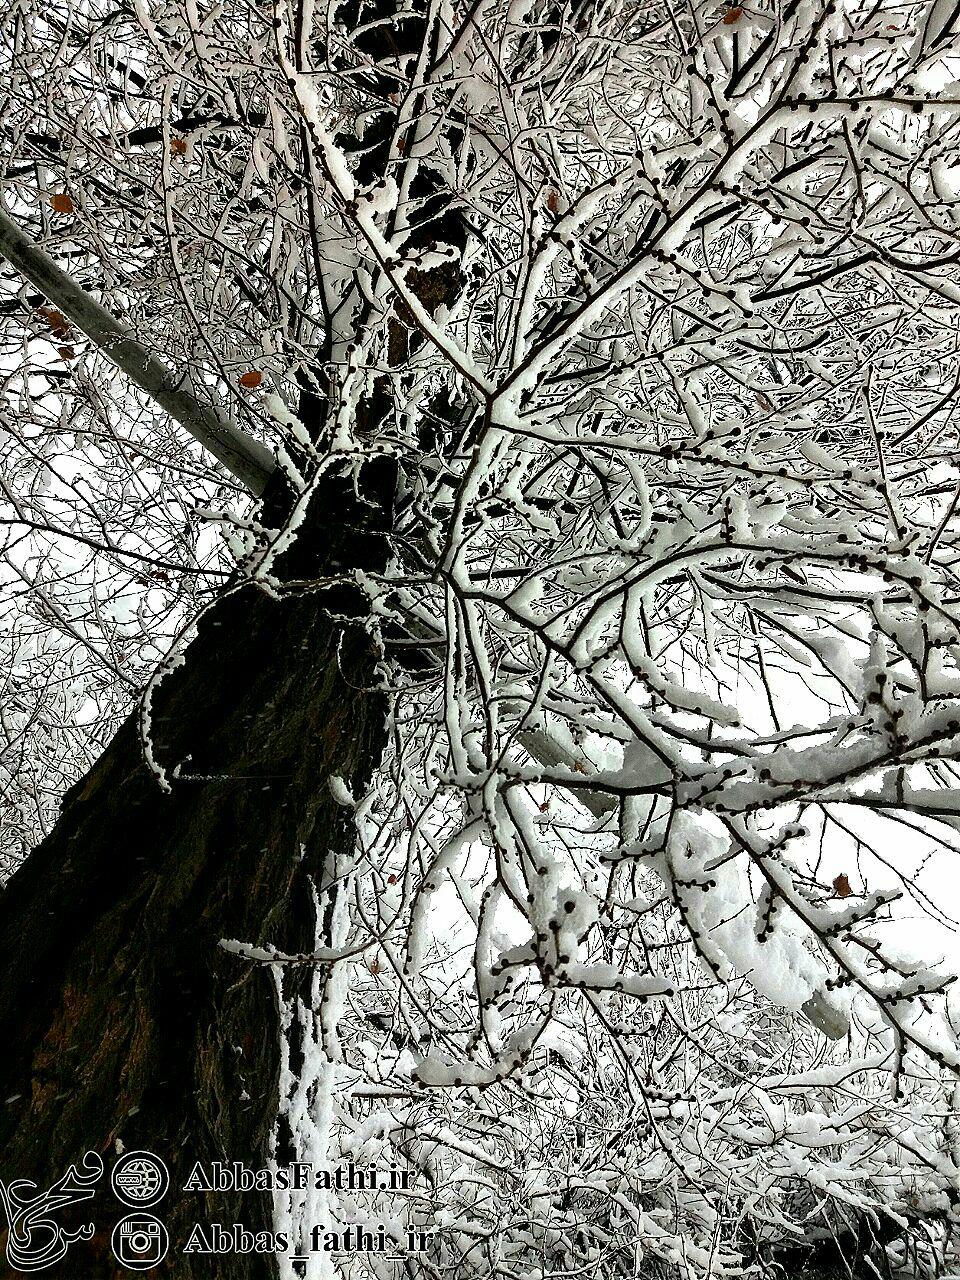 برف زیبا - اراک - 1395